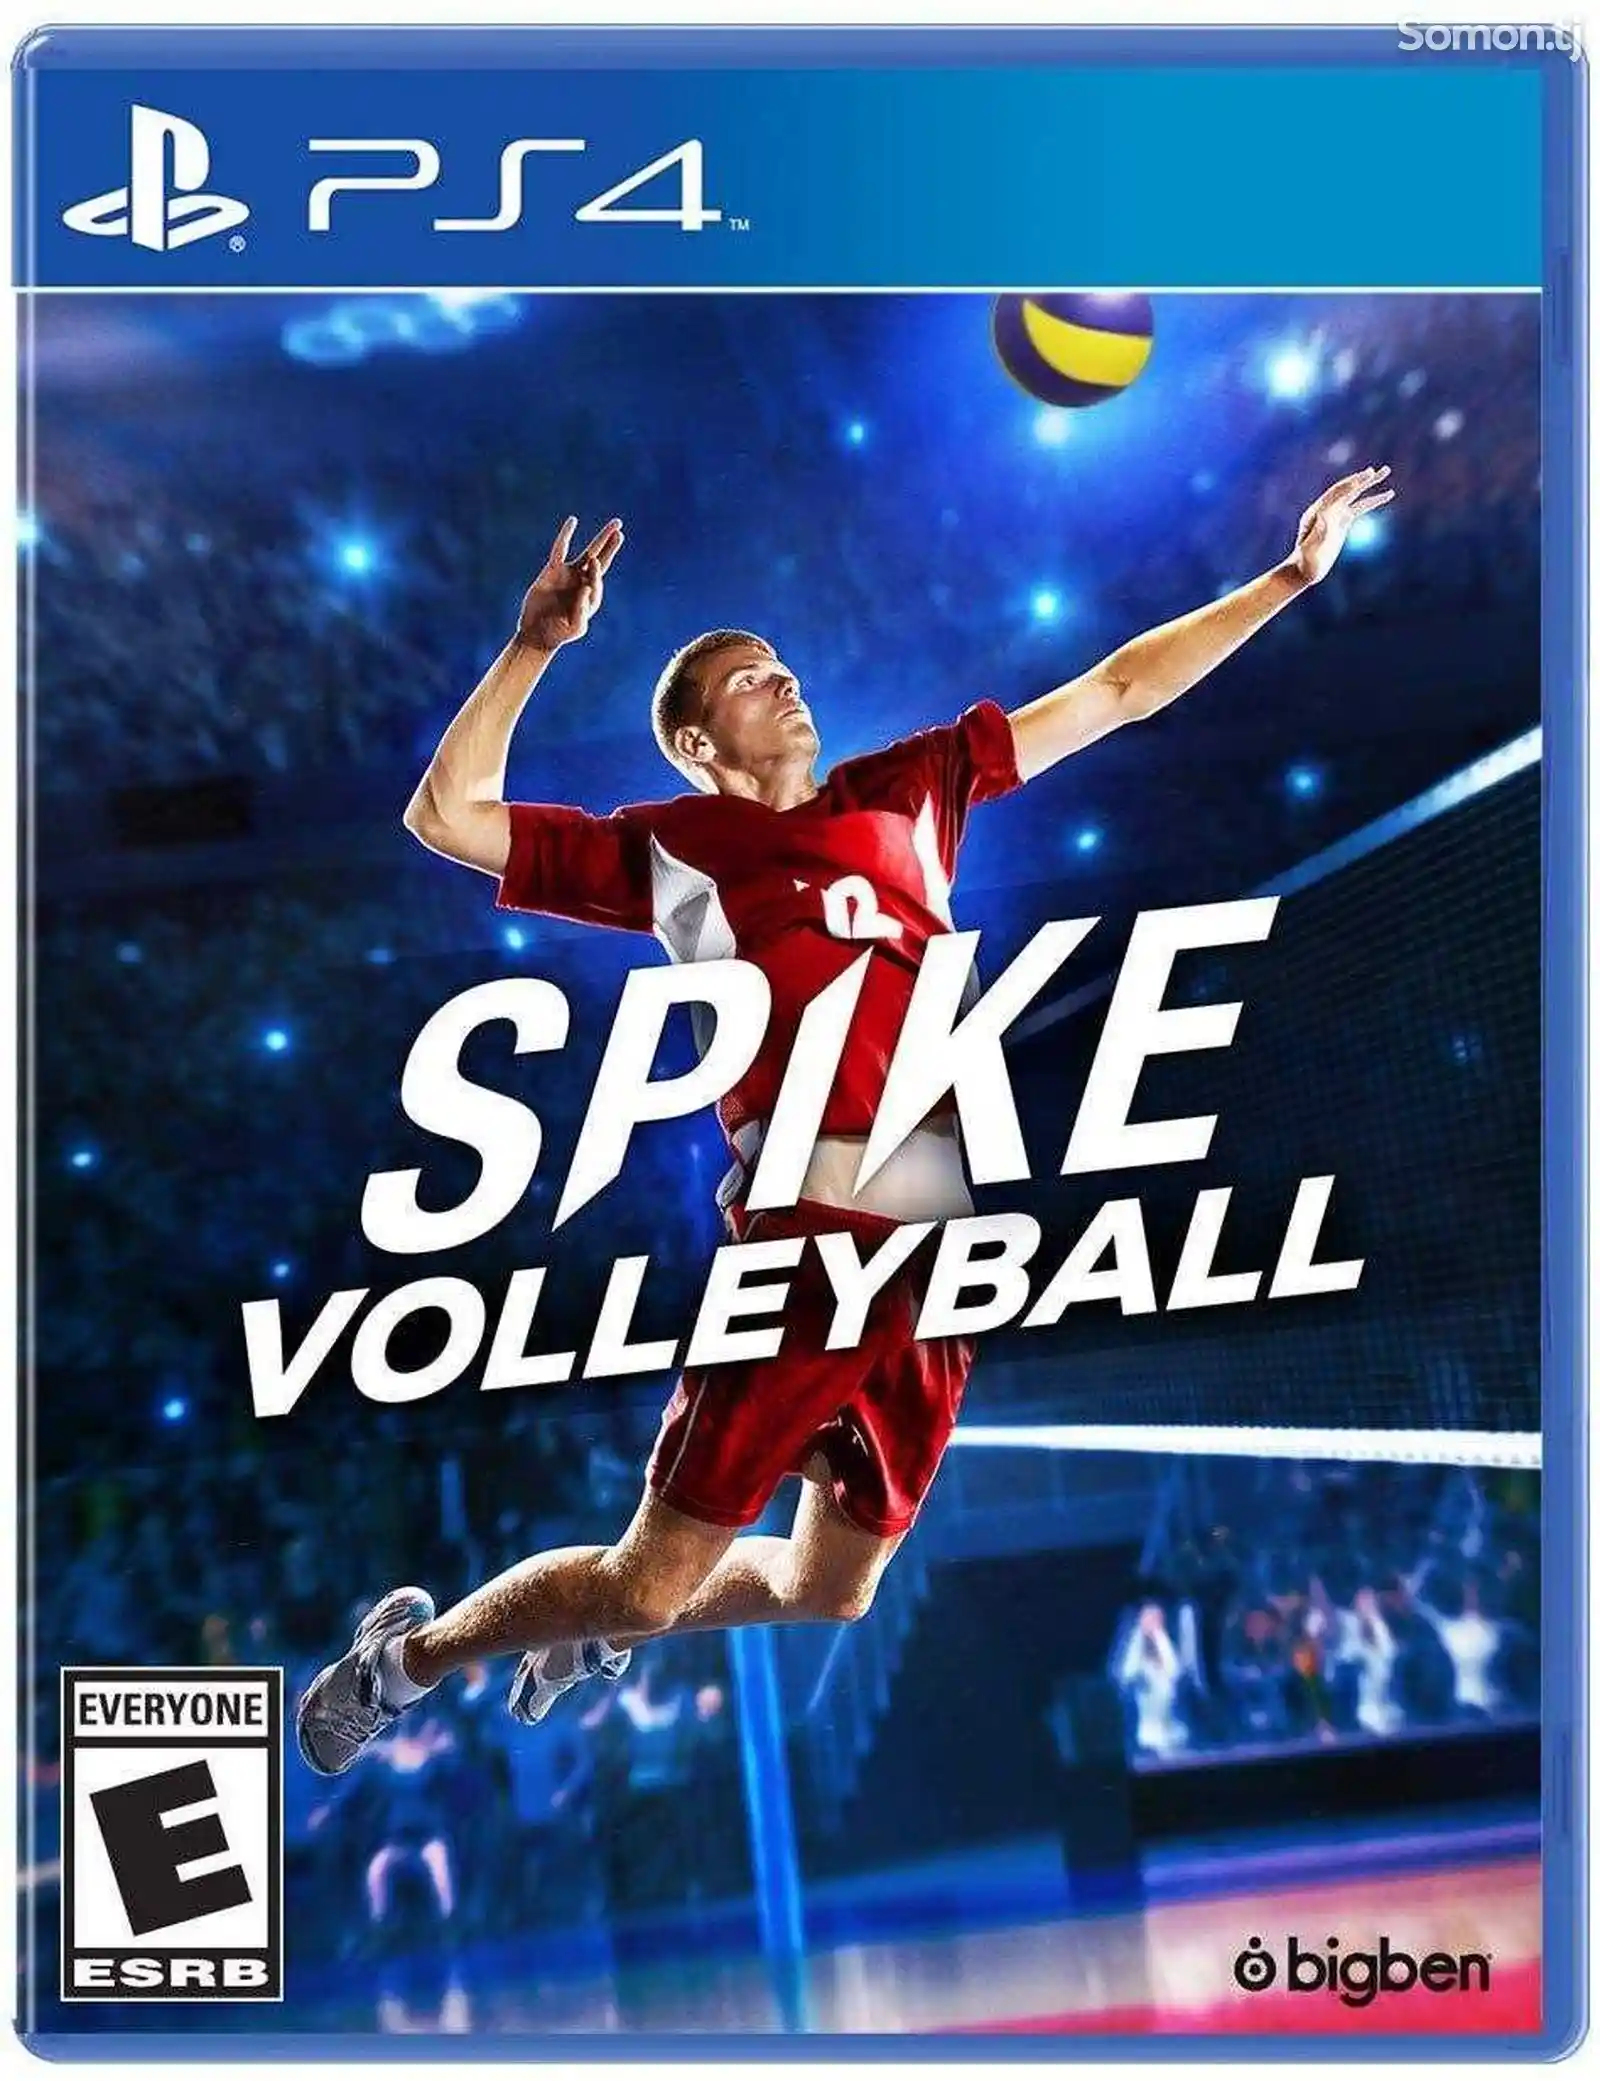 Игра Spike Volleyball для PS-4 / 5.05 / 6.72 / 7.02 / 7.55 / 9.00 /